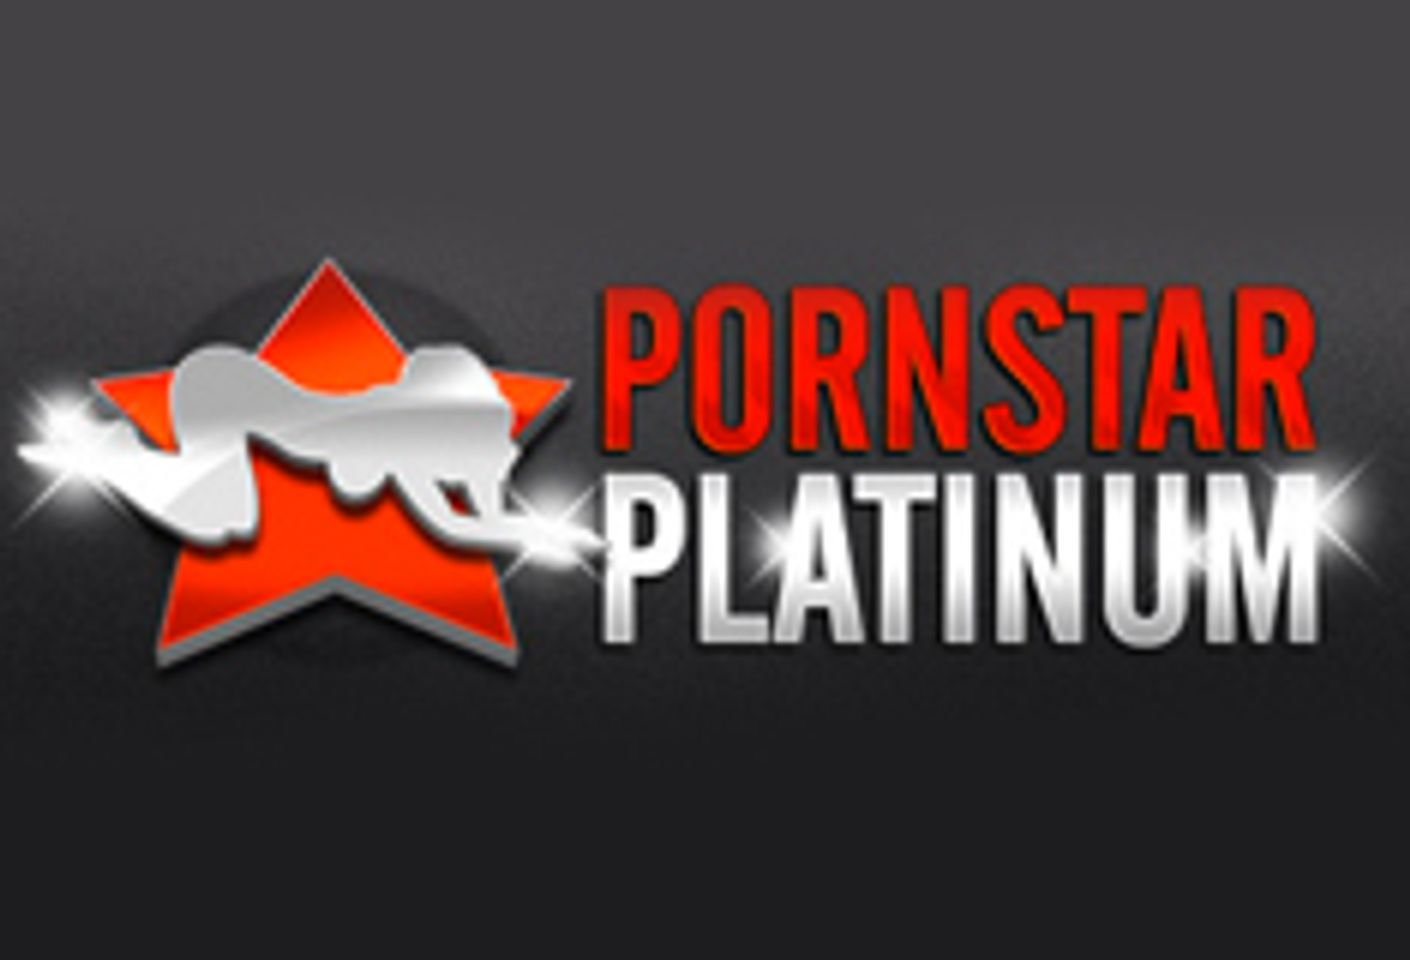 Pornstar Platinum Set to Launch Five Performer Websites